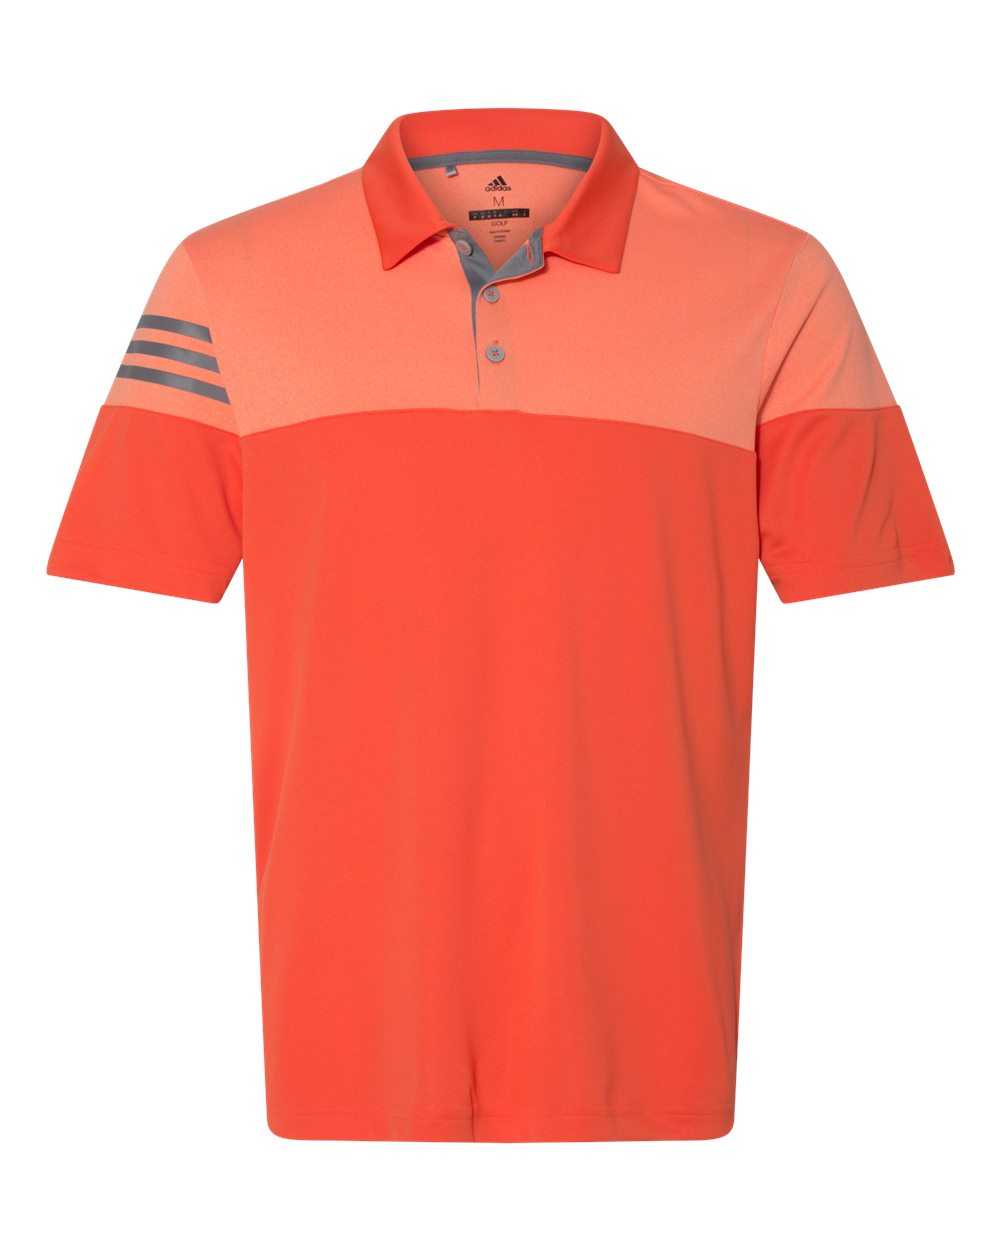 Adidas A213 Heathered 3-Stripes Block Sport Shirt - Blaze Orange Vista Grey - HIT a Double